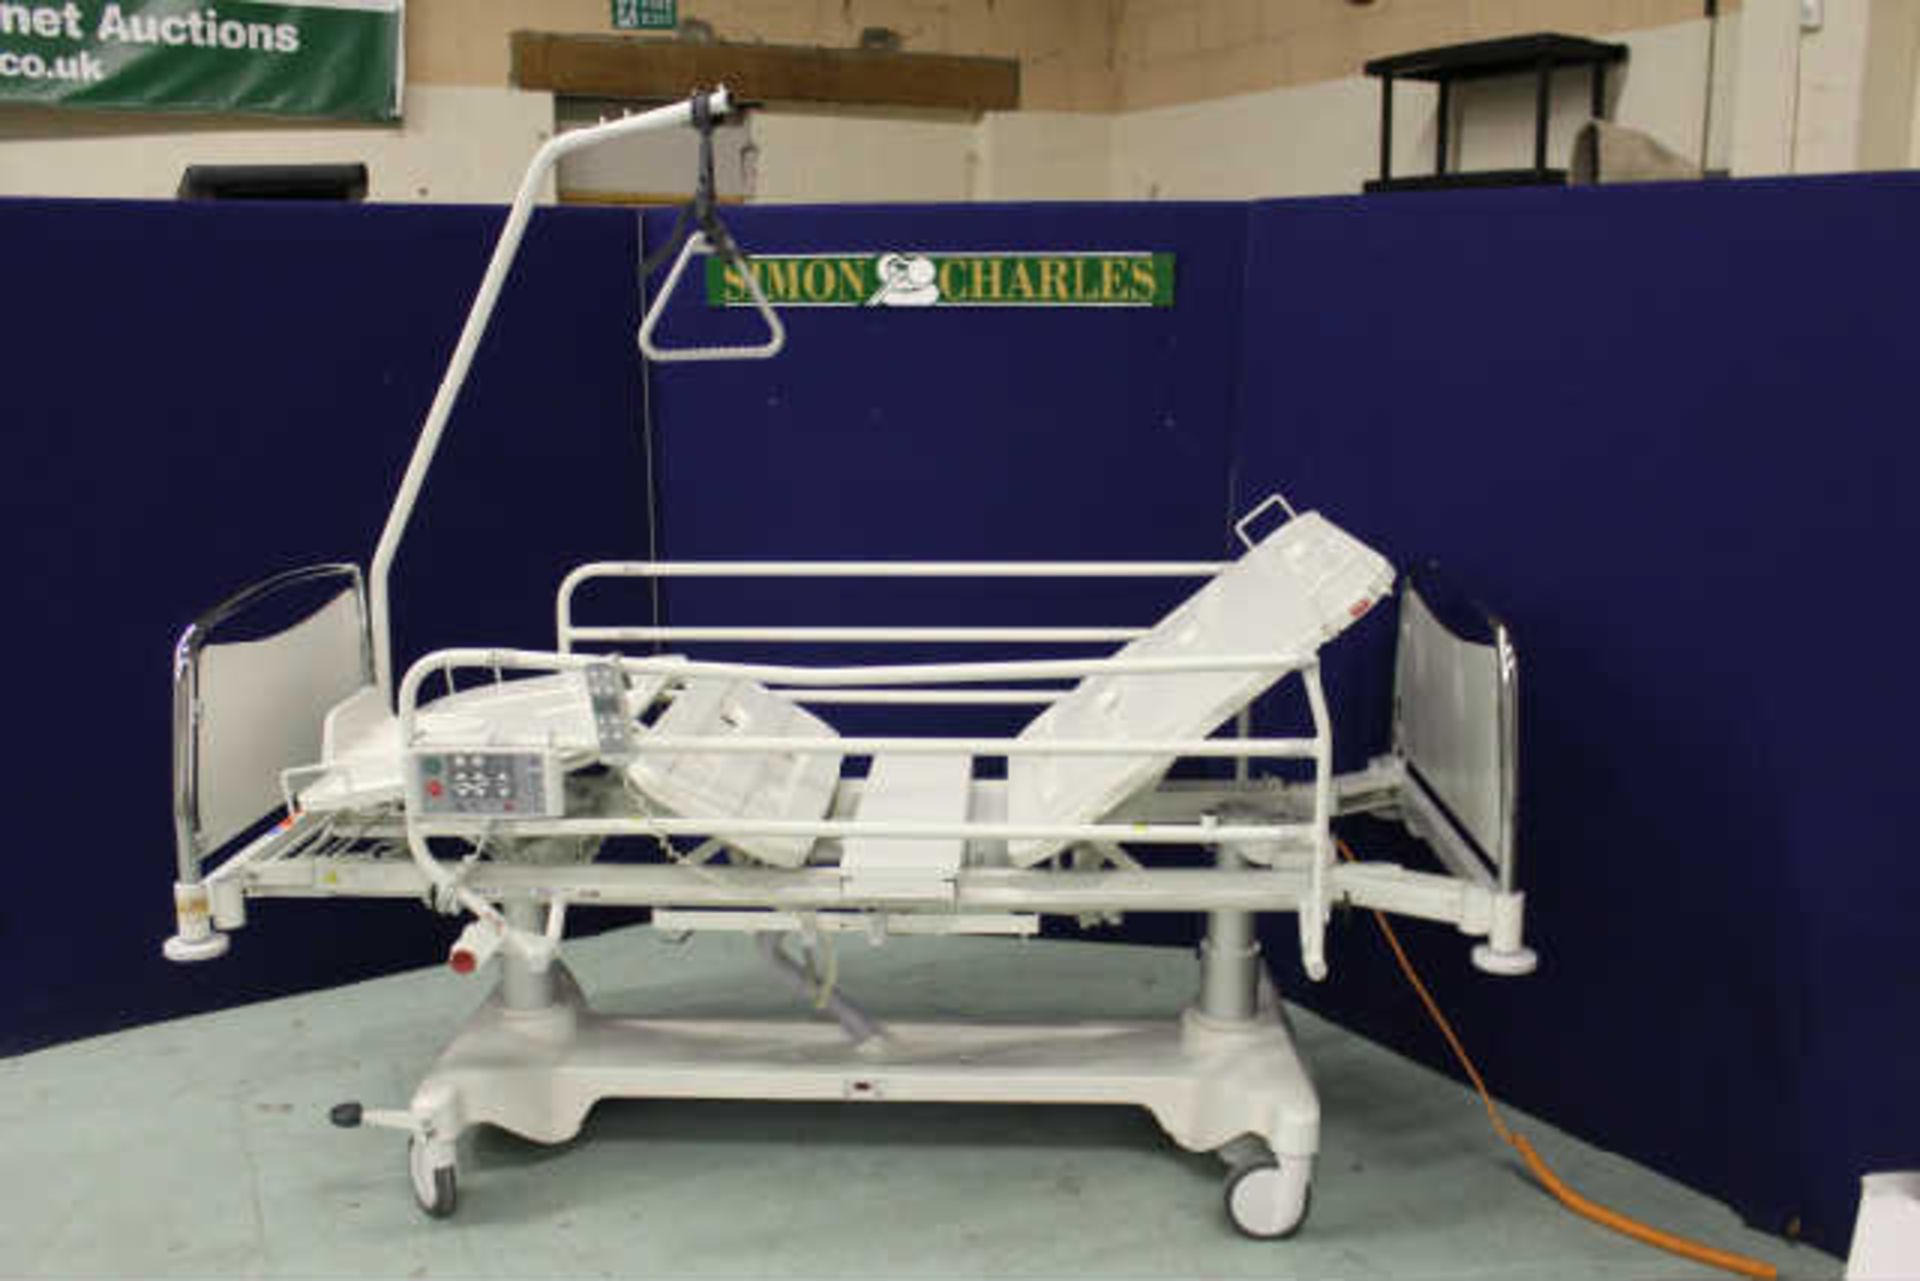 ELEGANZA STANDARD 3000 CPR ADJUSTABLE ELECTRICAL HOSPITAL BED WITH STANDARD 110V INDUSTRIAL PLUG AND - Image 2 of 2